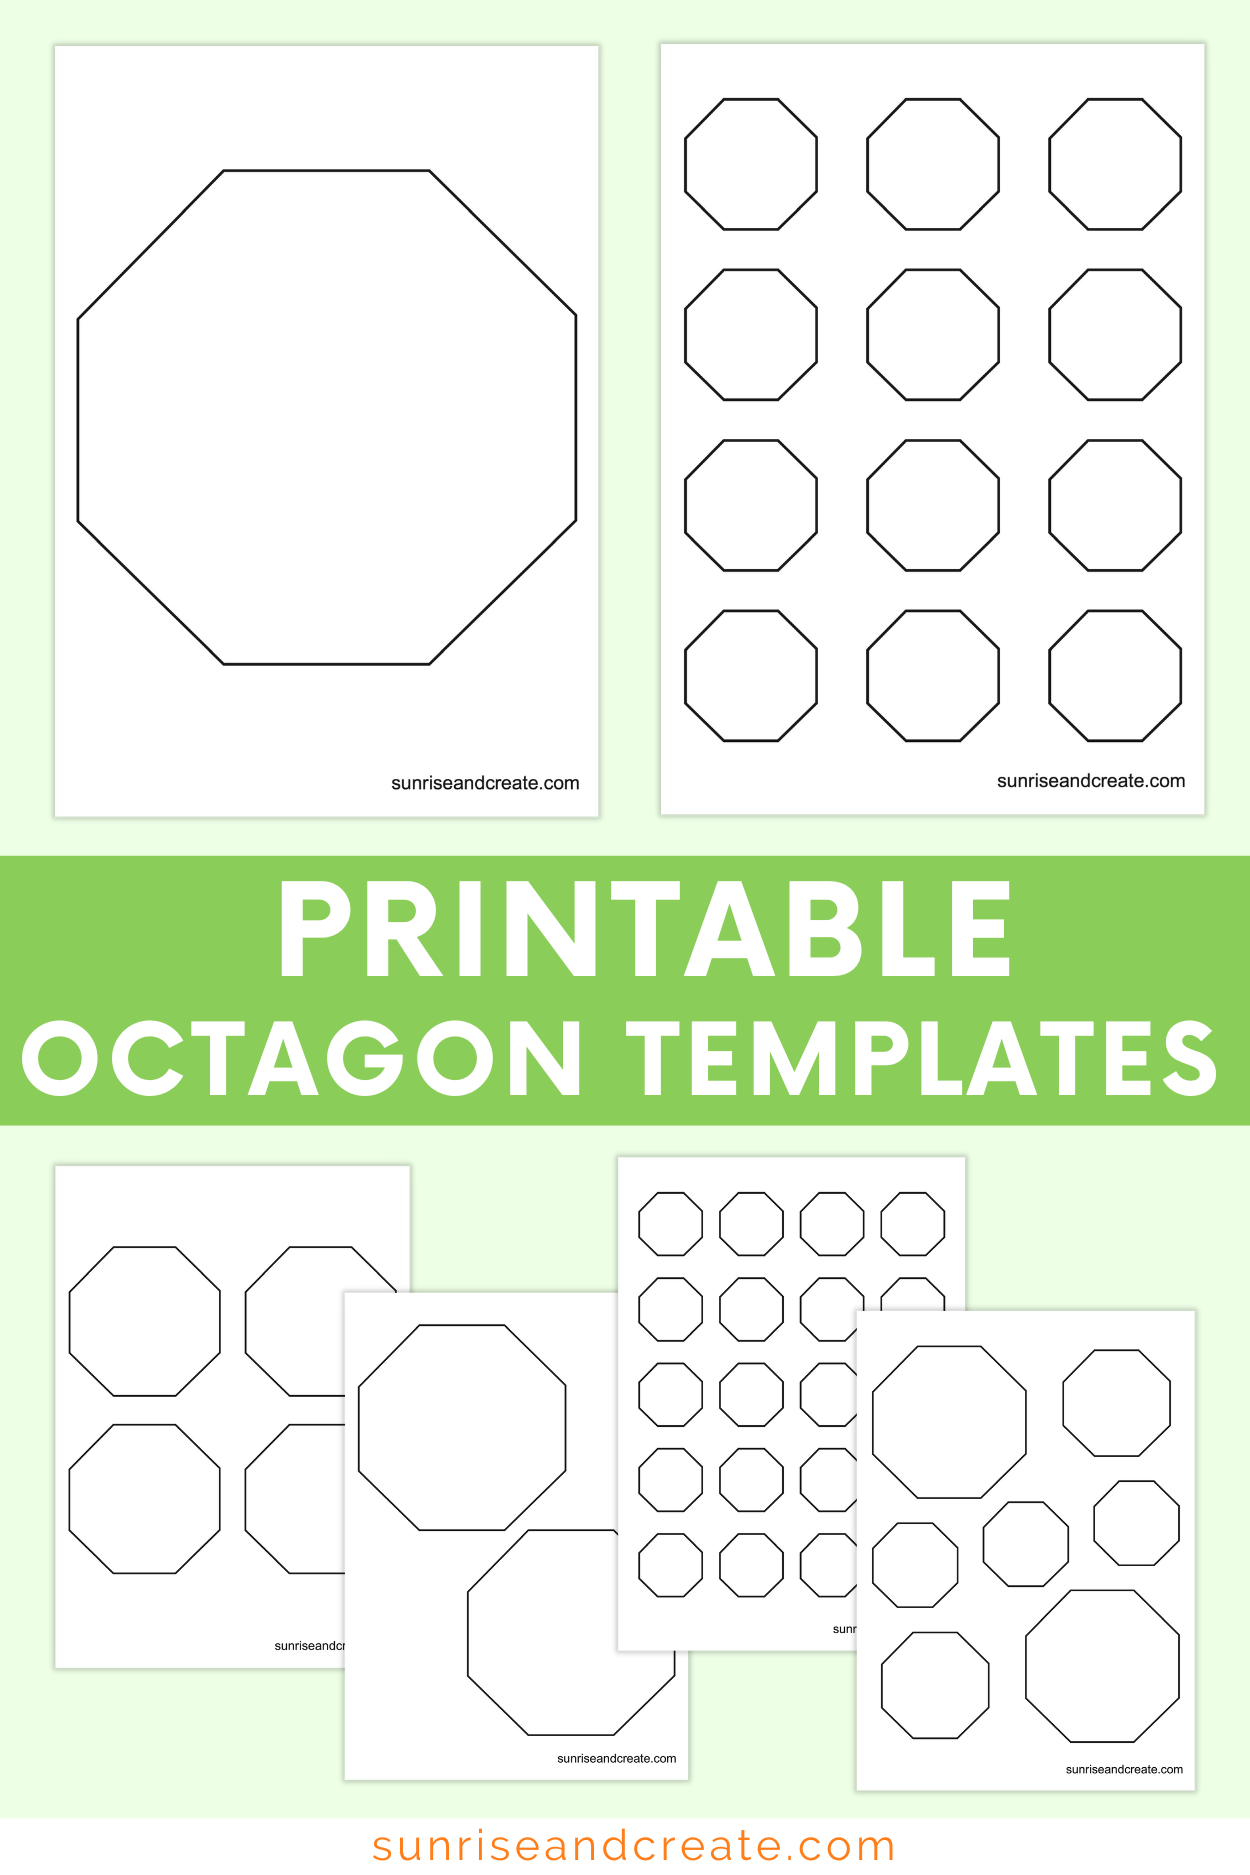 Free Printable Octagon Templates - Sunrise and Create